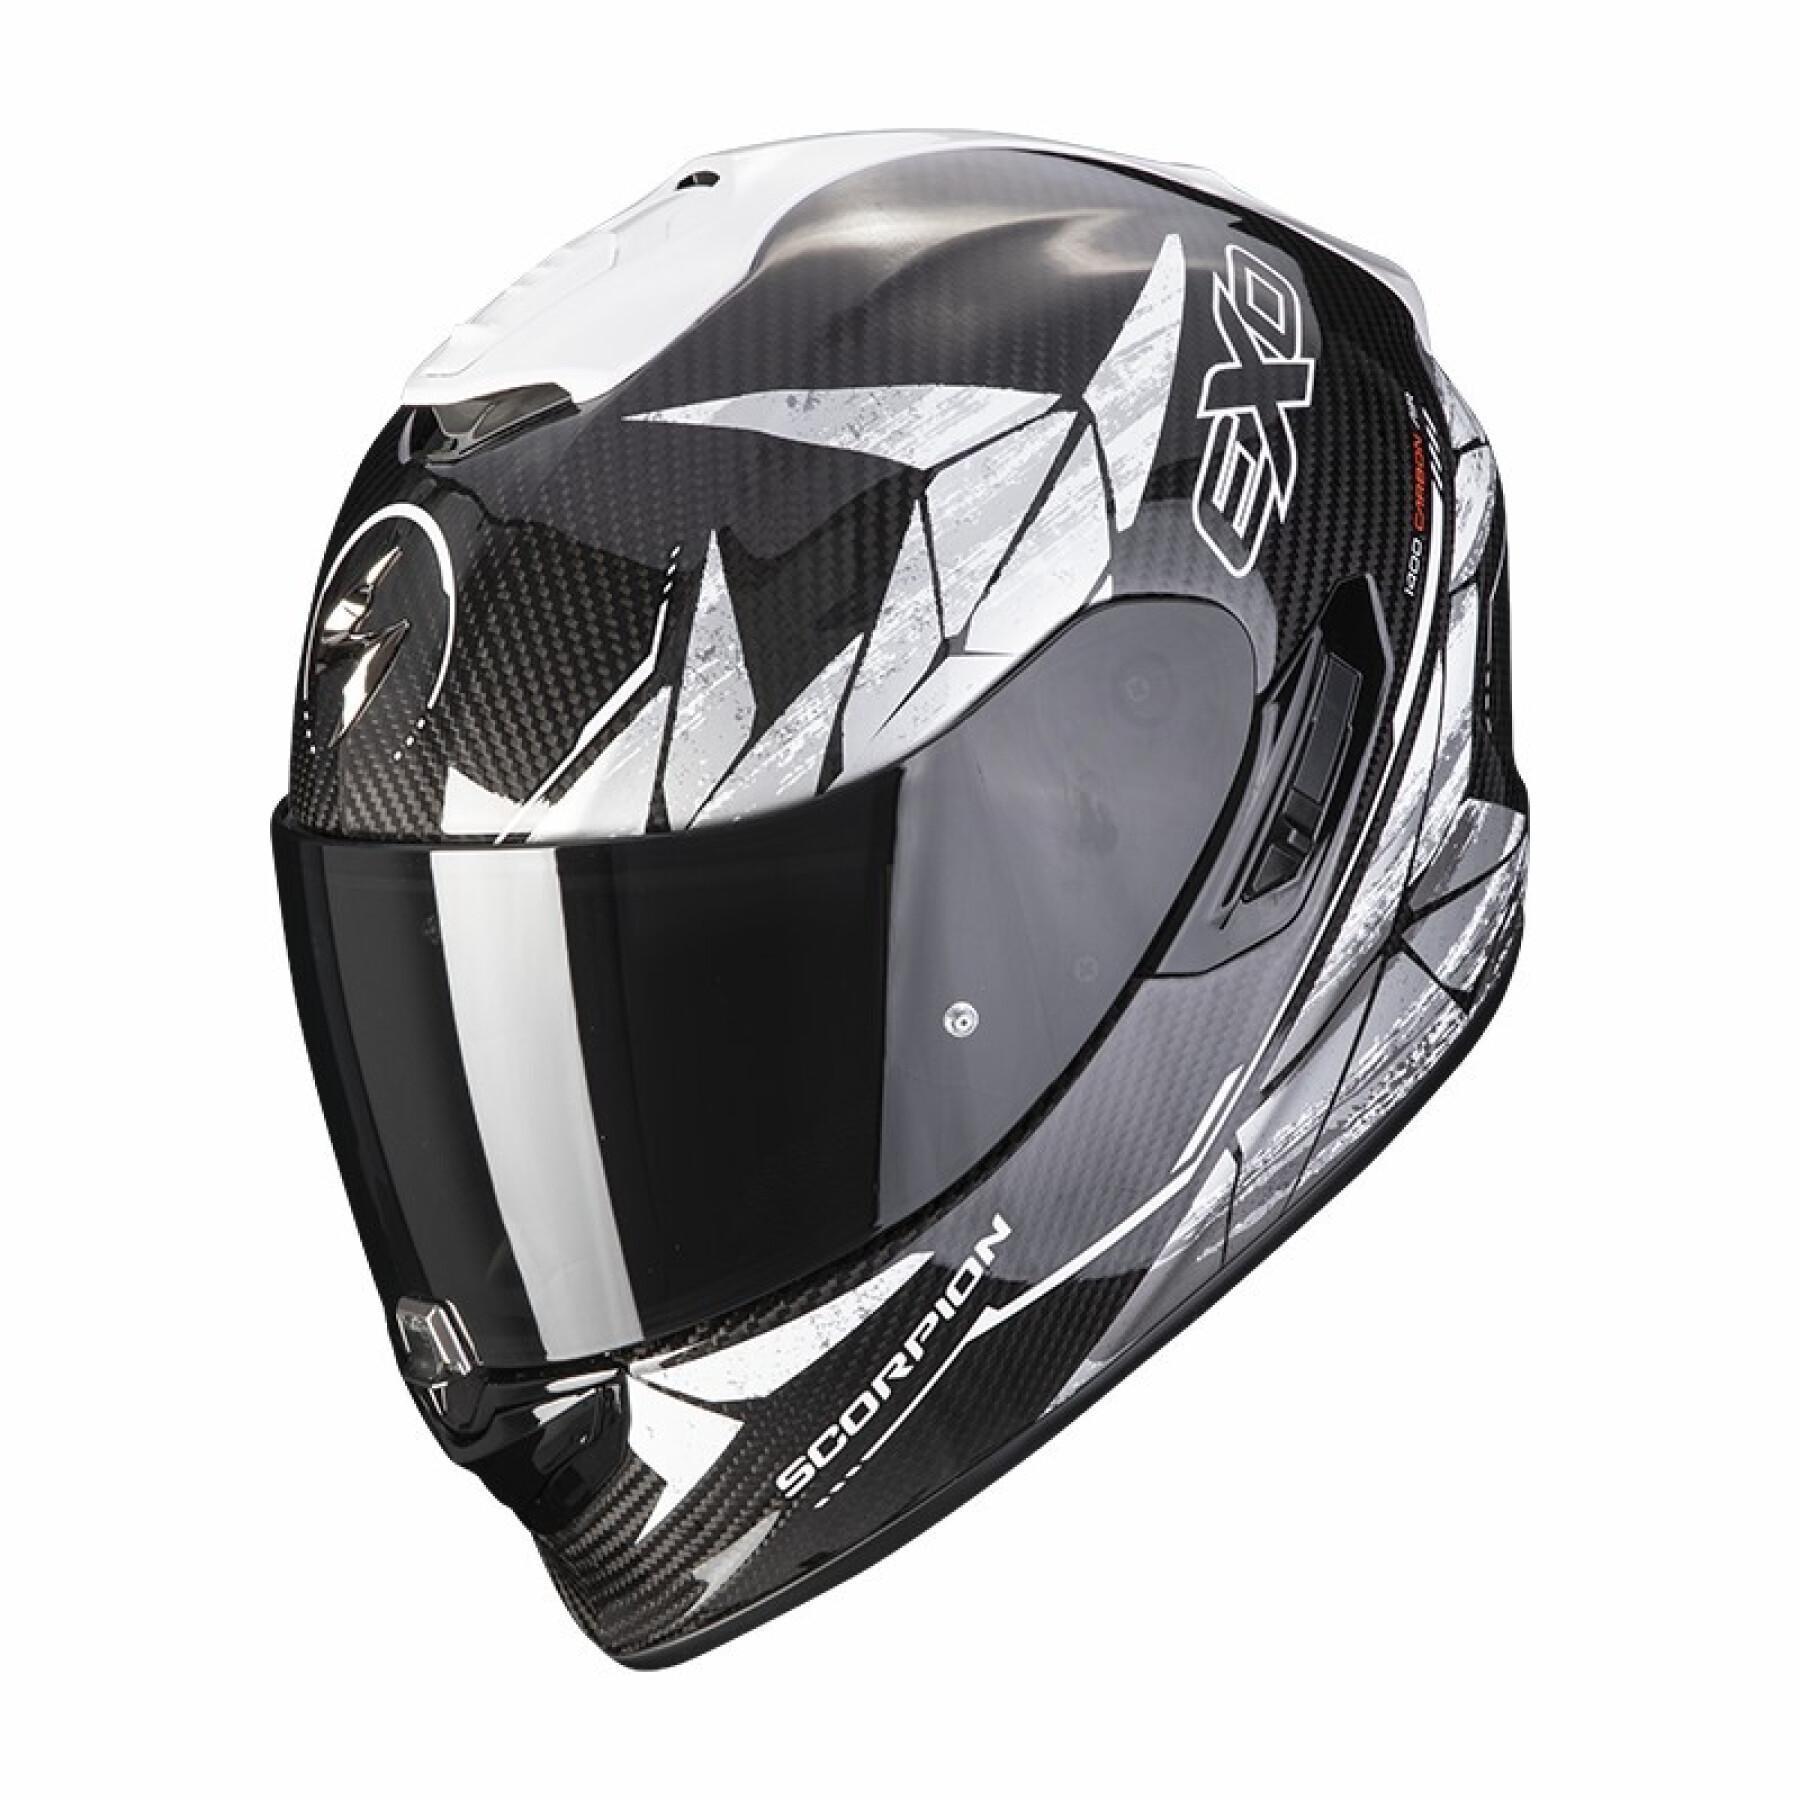 Full face motorcycle helmet Scorpion Exo-1400 Evo Carbon Air Aranea ECE 22-06